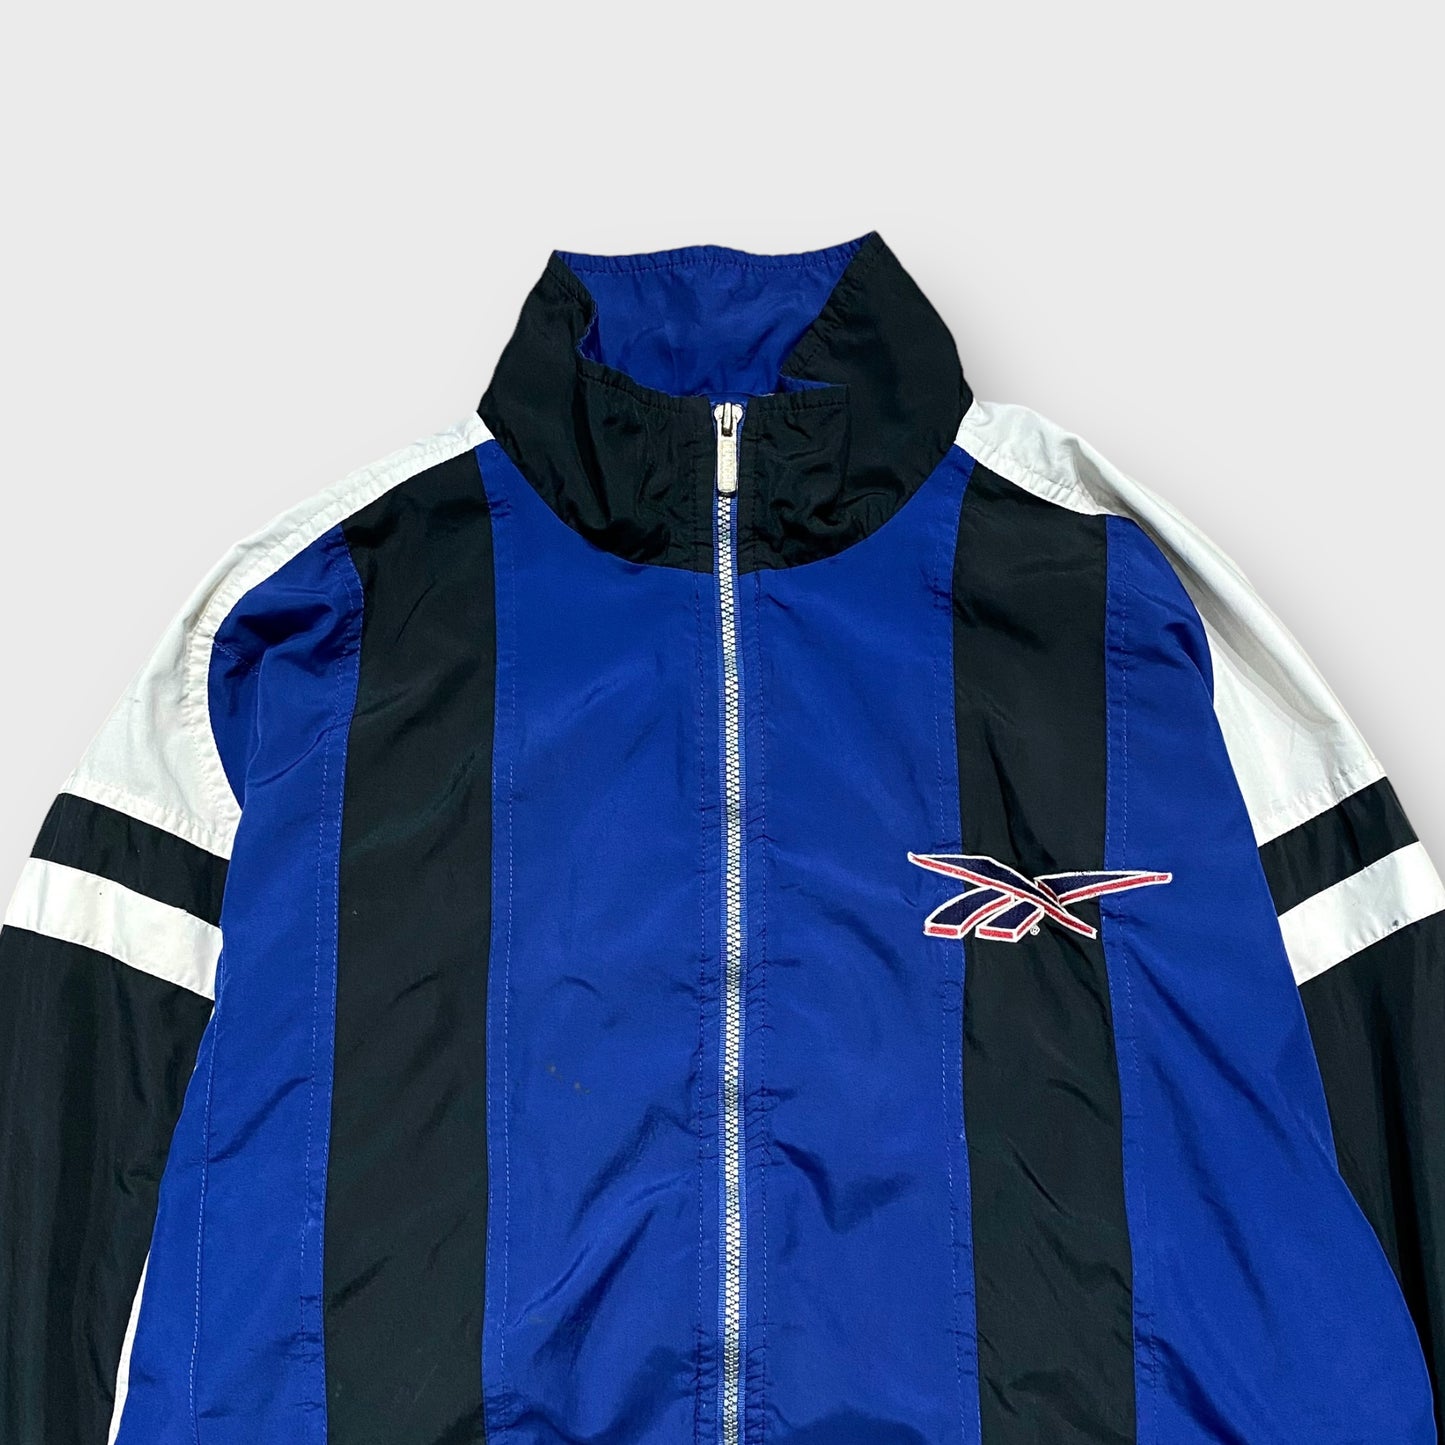 90's "Reebok" Nylon jacket